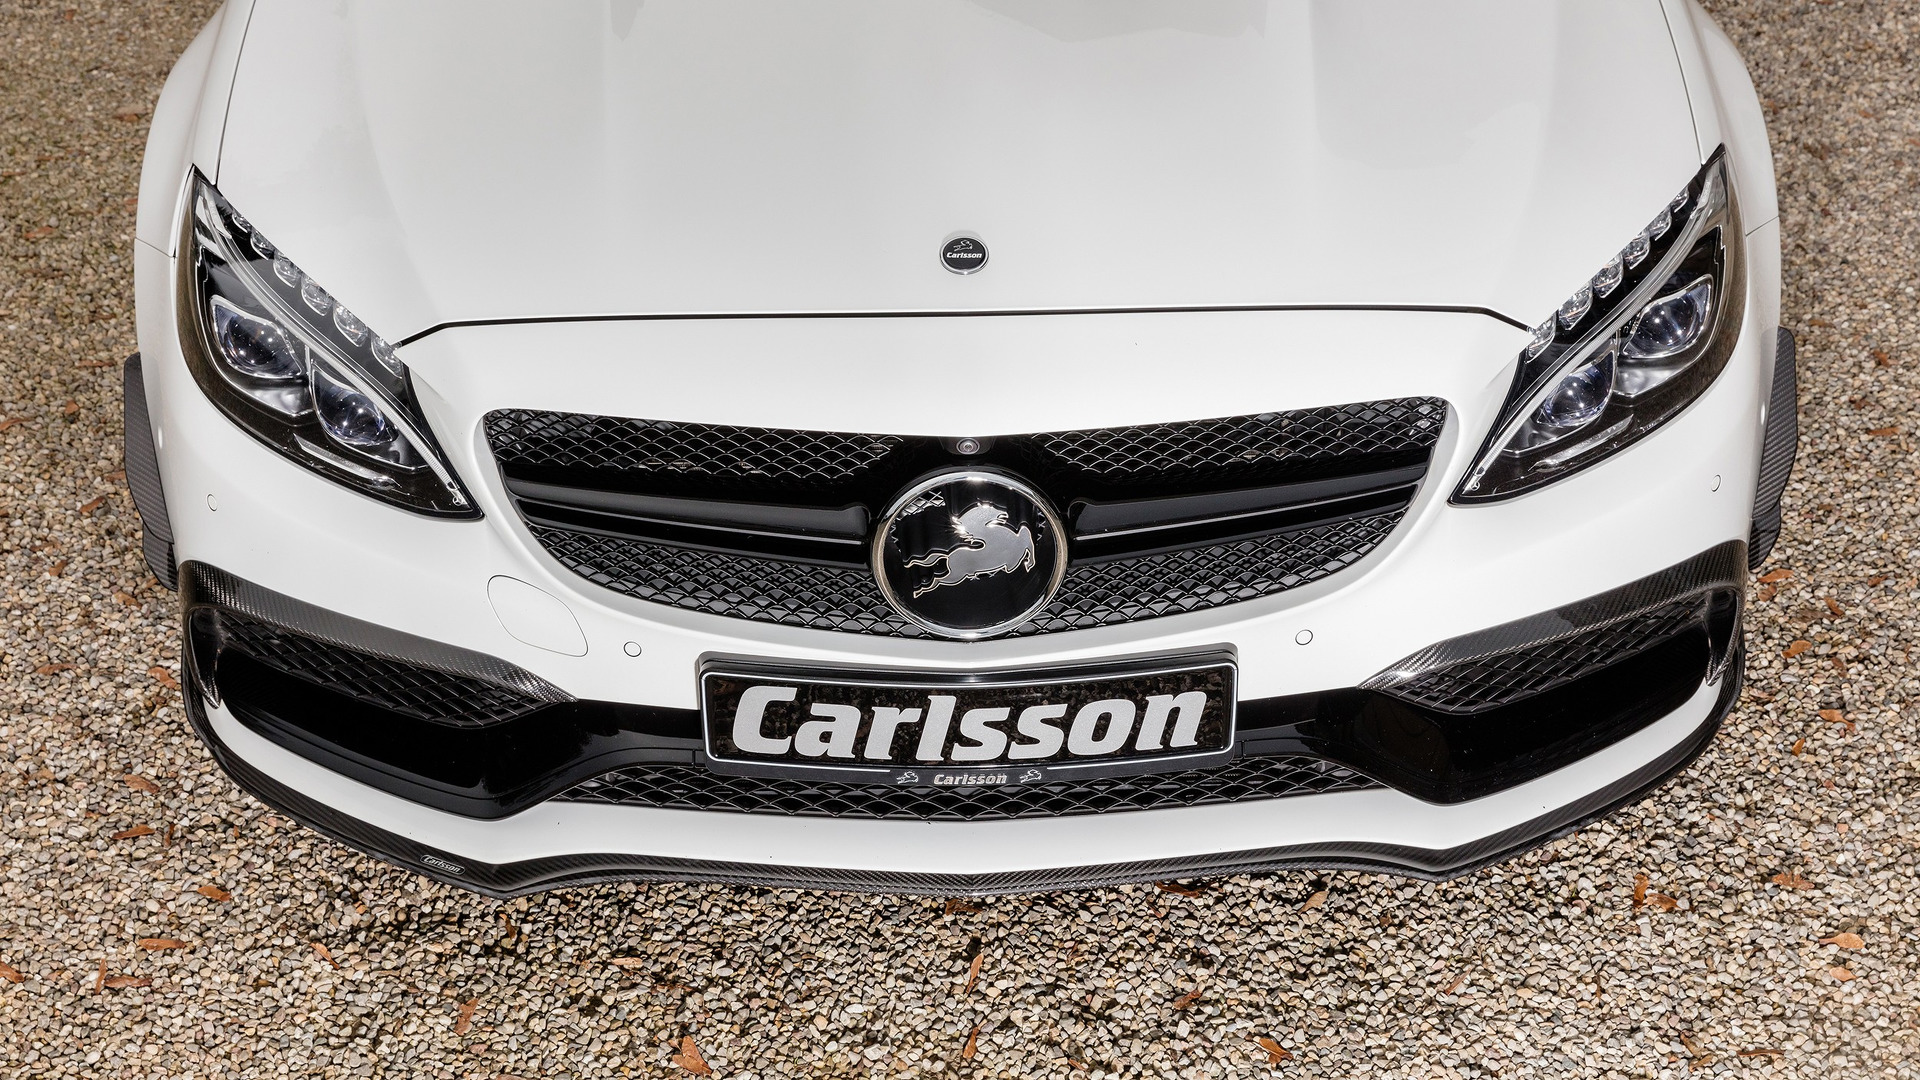 Carlsson Mercedes-AMG C63 S